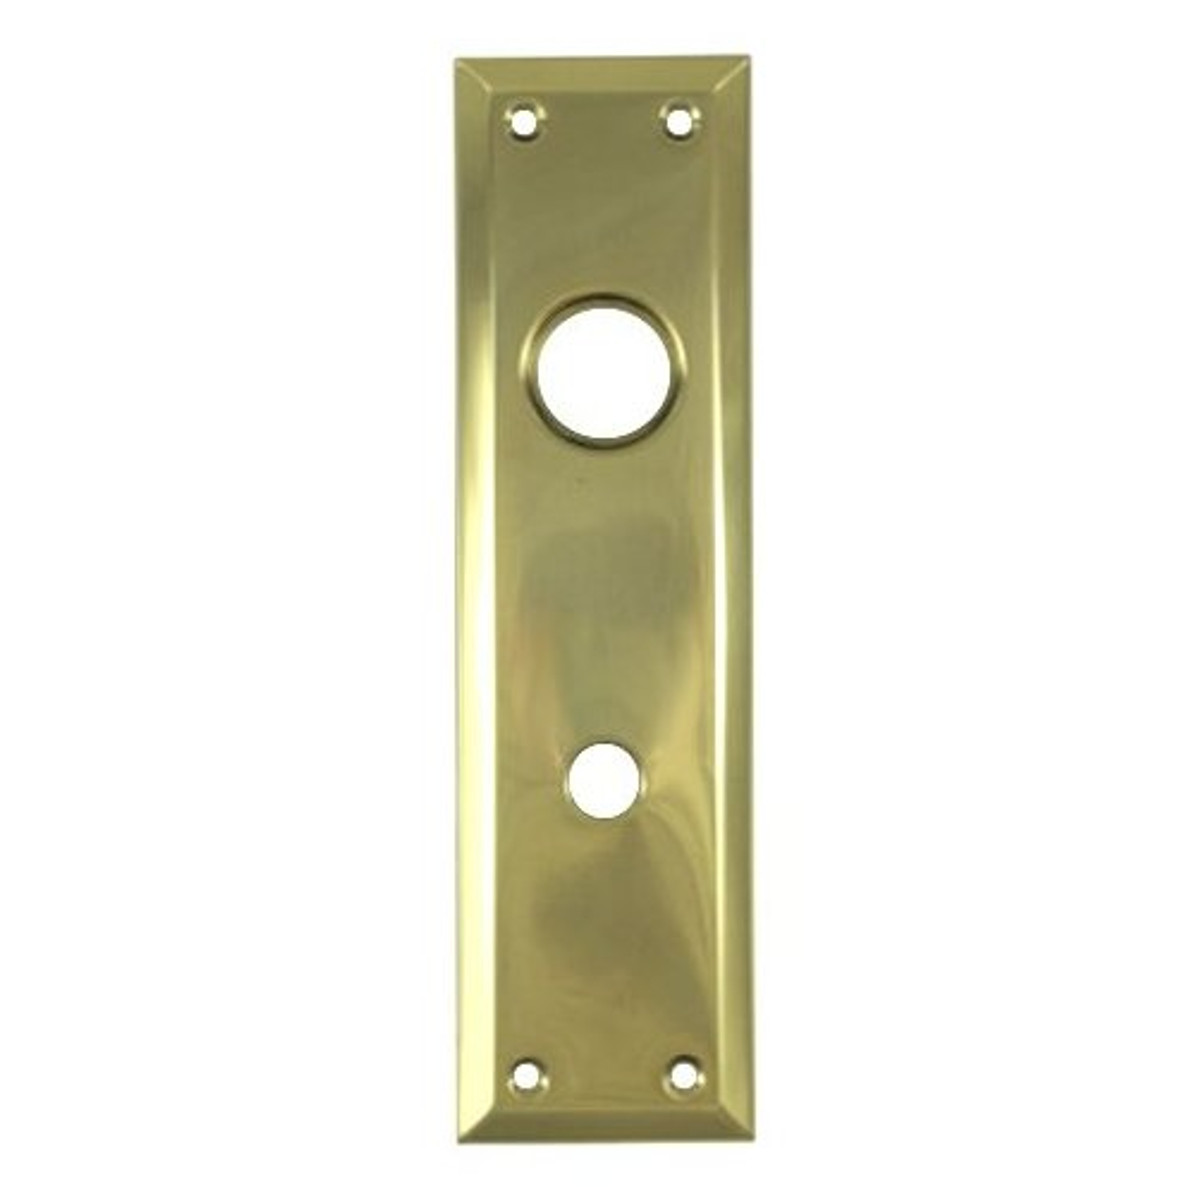 2-3/4 X 10 Solid Brass Escutcheon Plate w/ Knob Hole And Cylinder Hole -  Greschlers Hardware